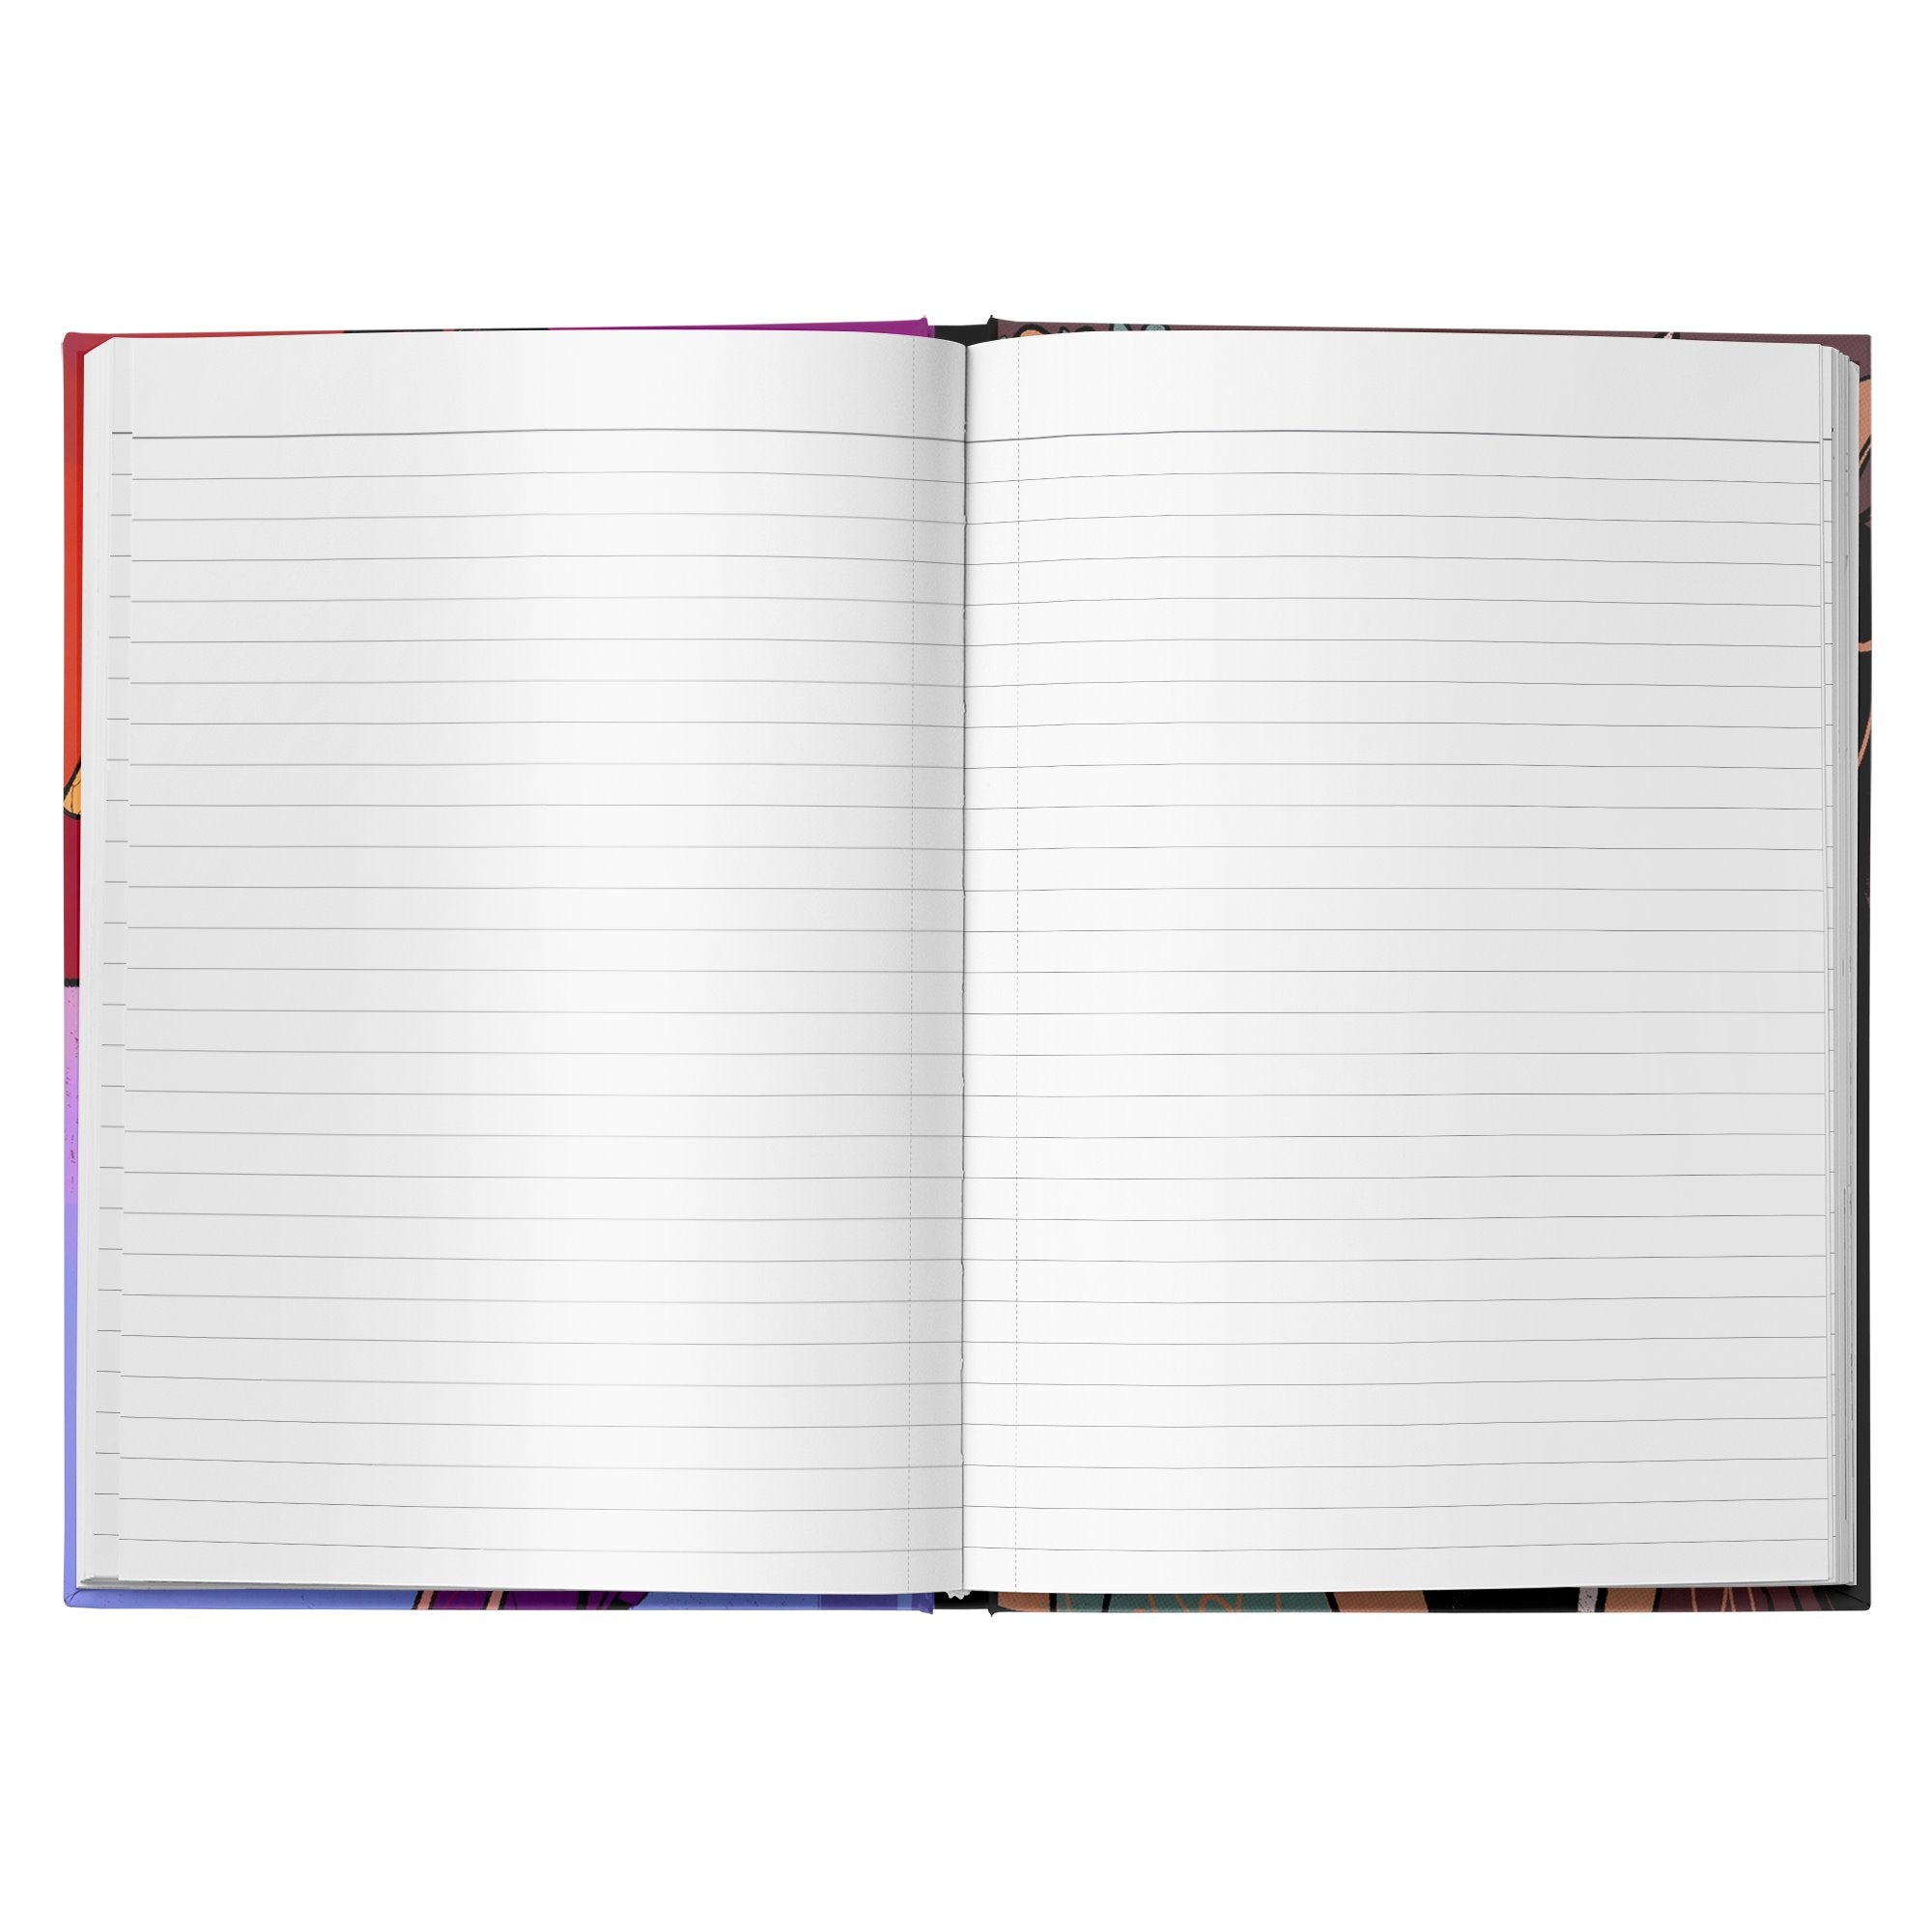 dfrnt | hardcover notebook